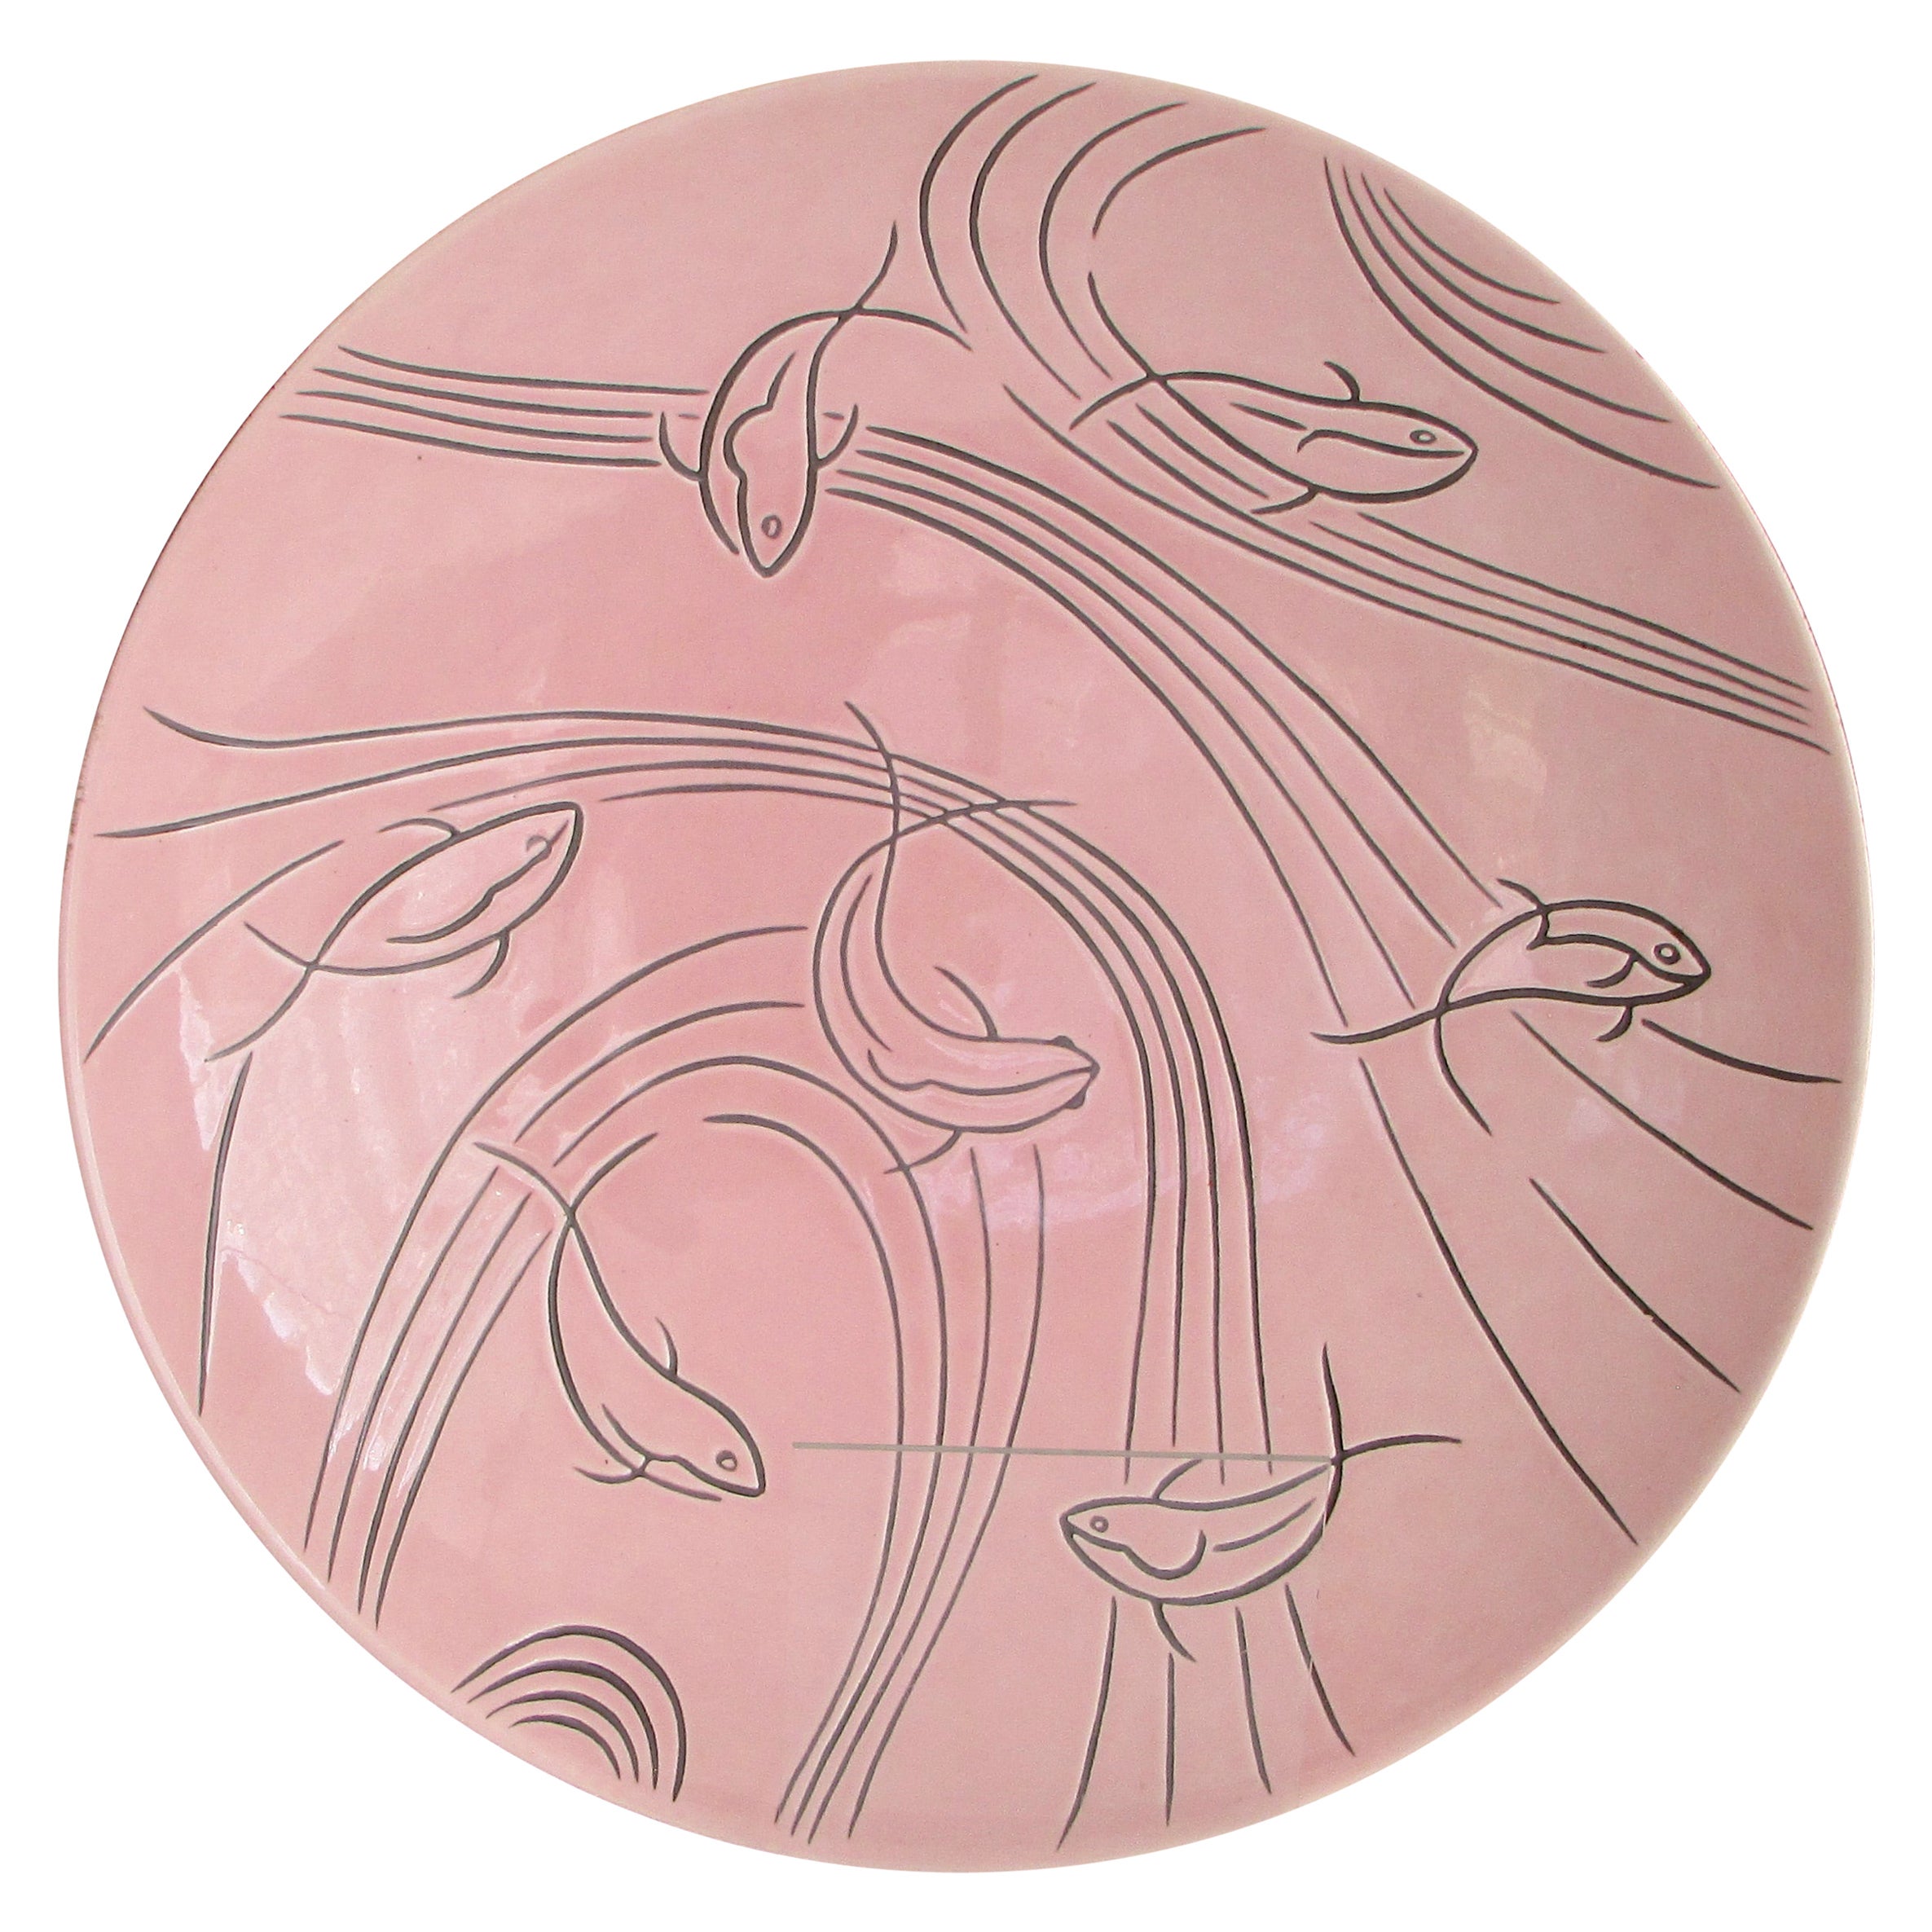 Roselane Pottery of Pasadena Rosa Salatschüssel mit eingeschnittenem Modernist Fish Design